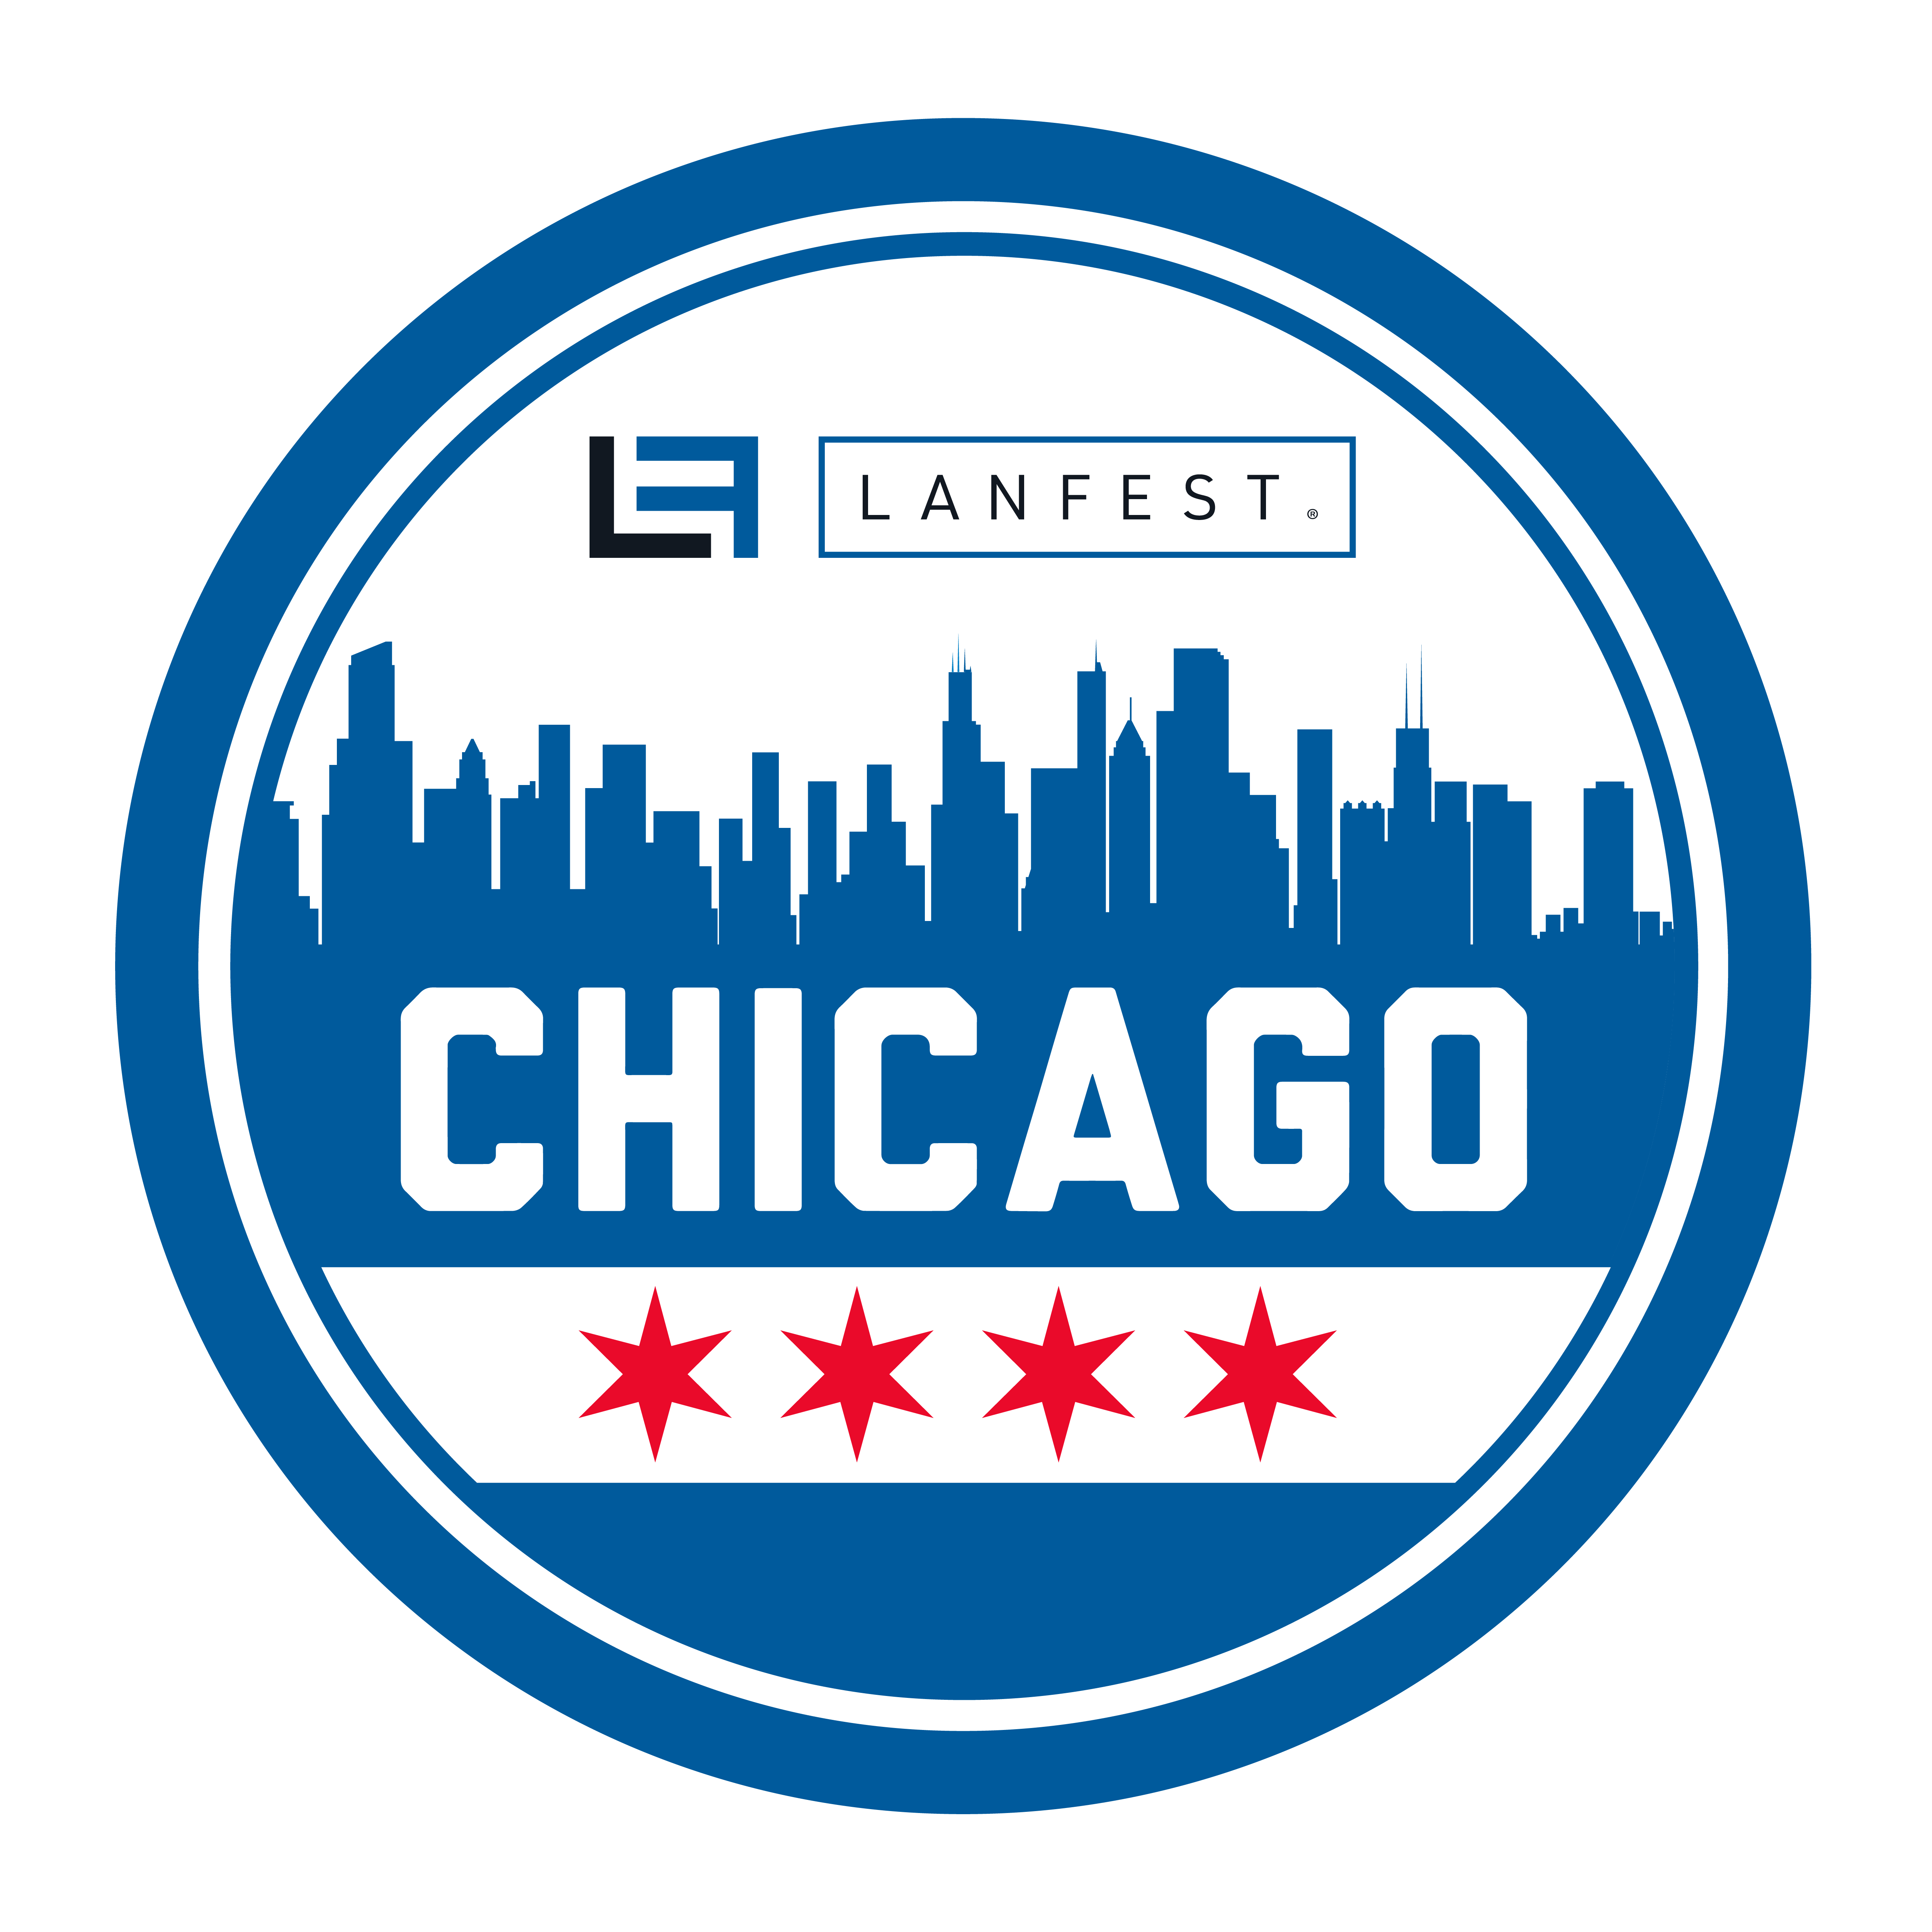 LANFEST Chicago